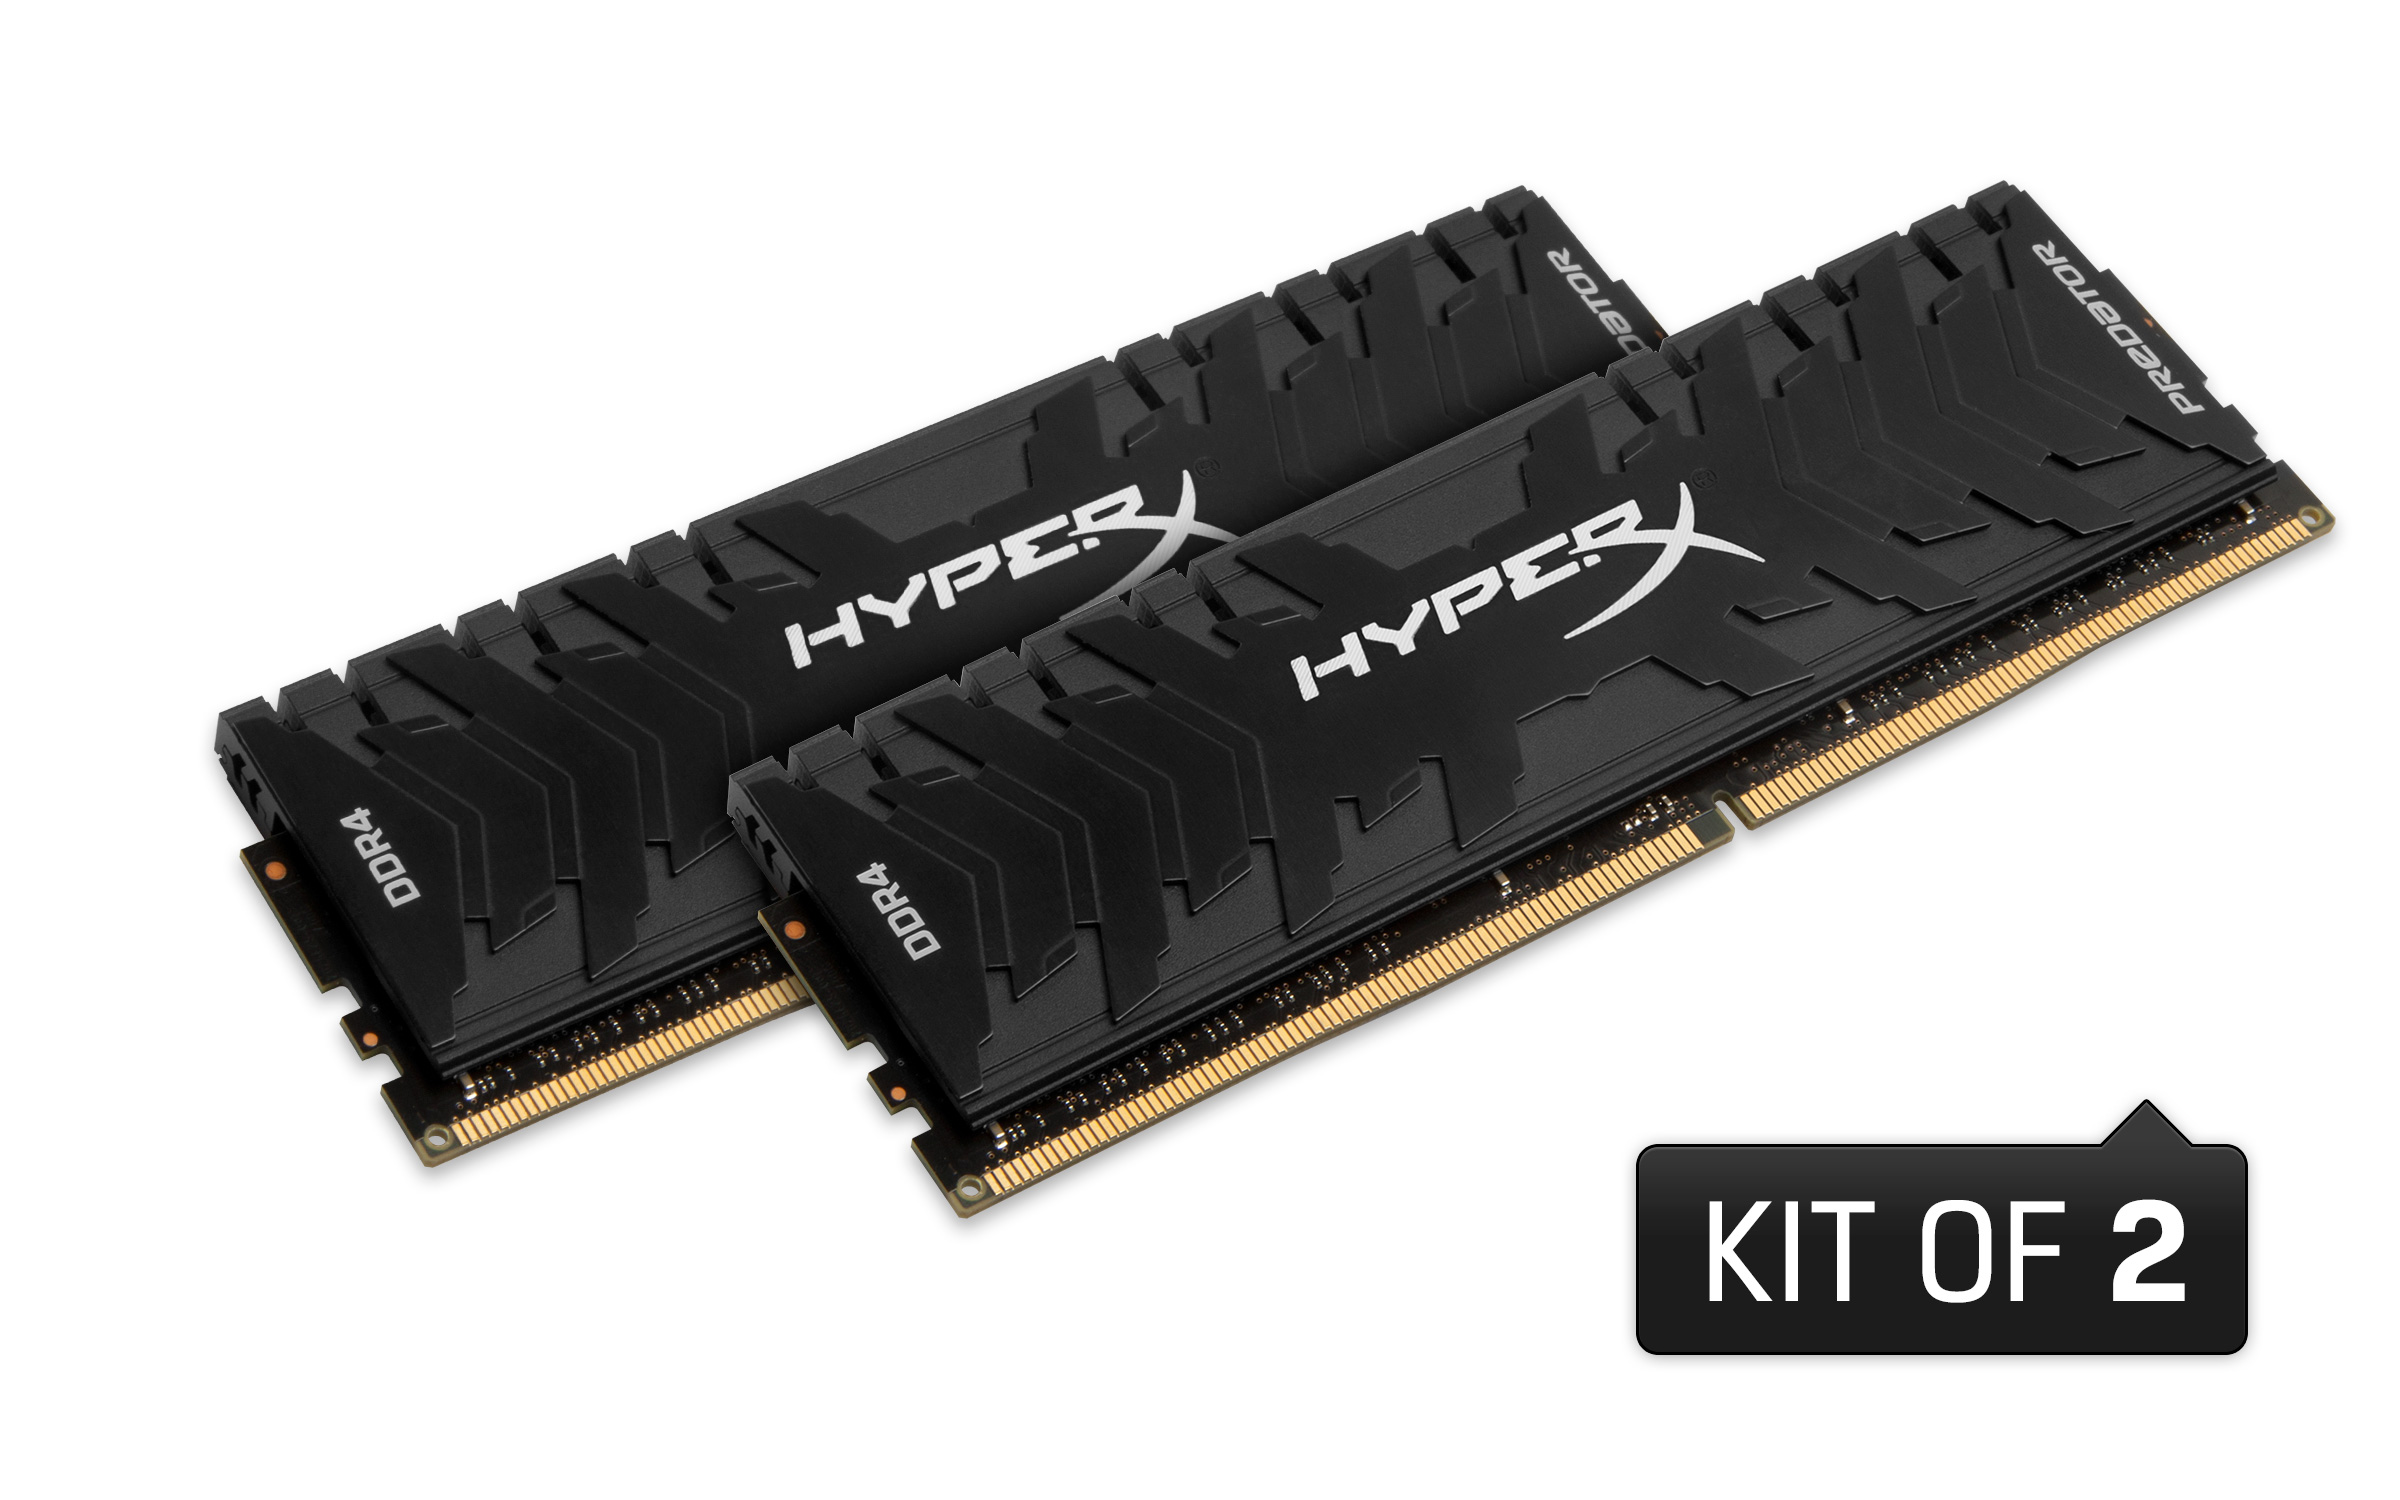 HyperX Predator DDR4 kit